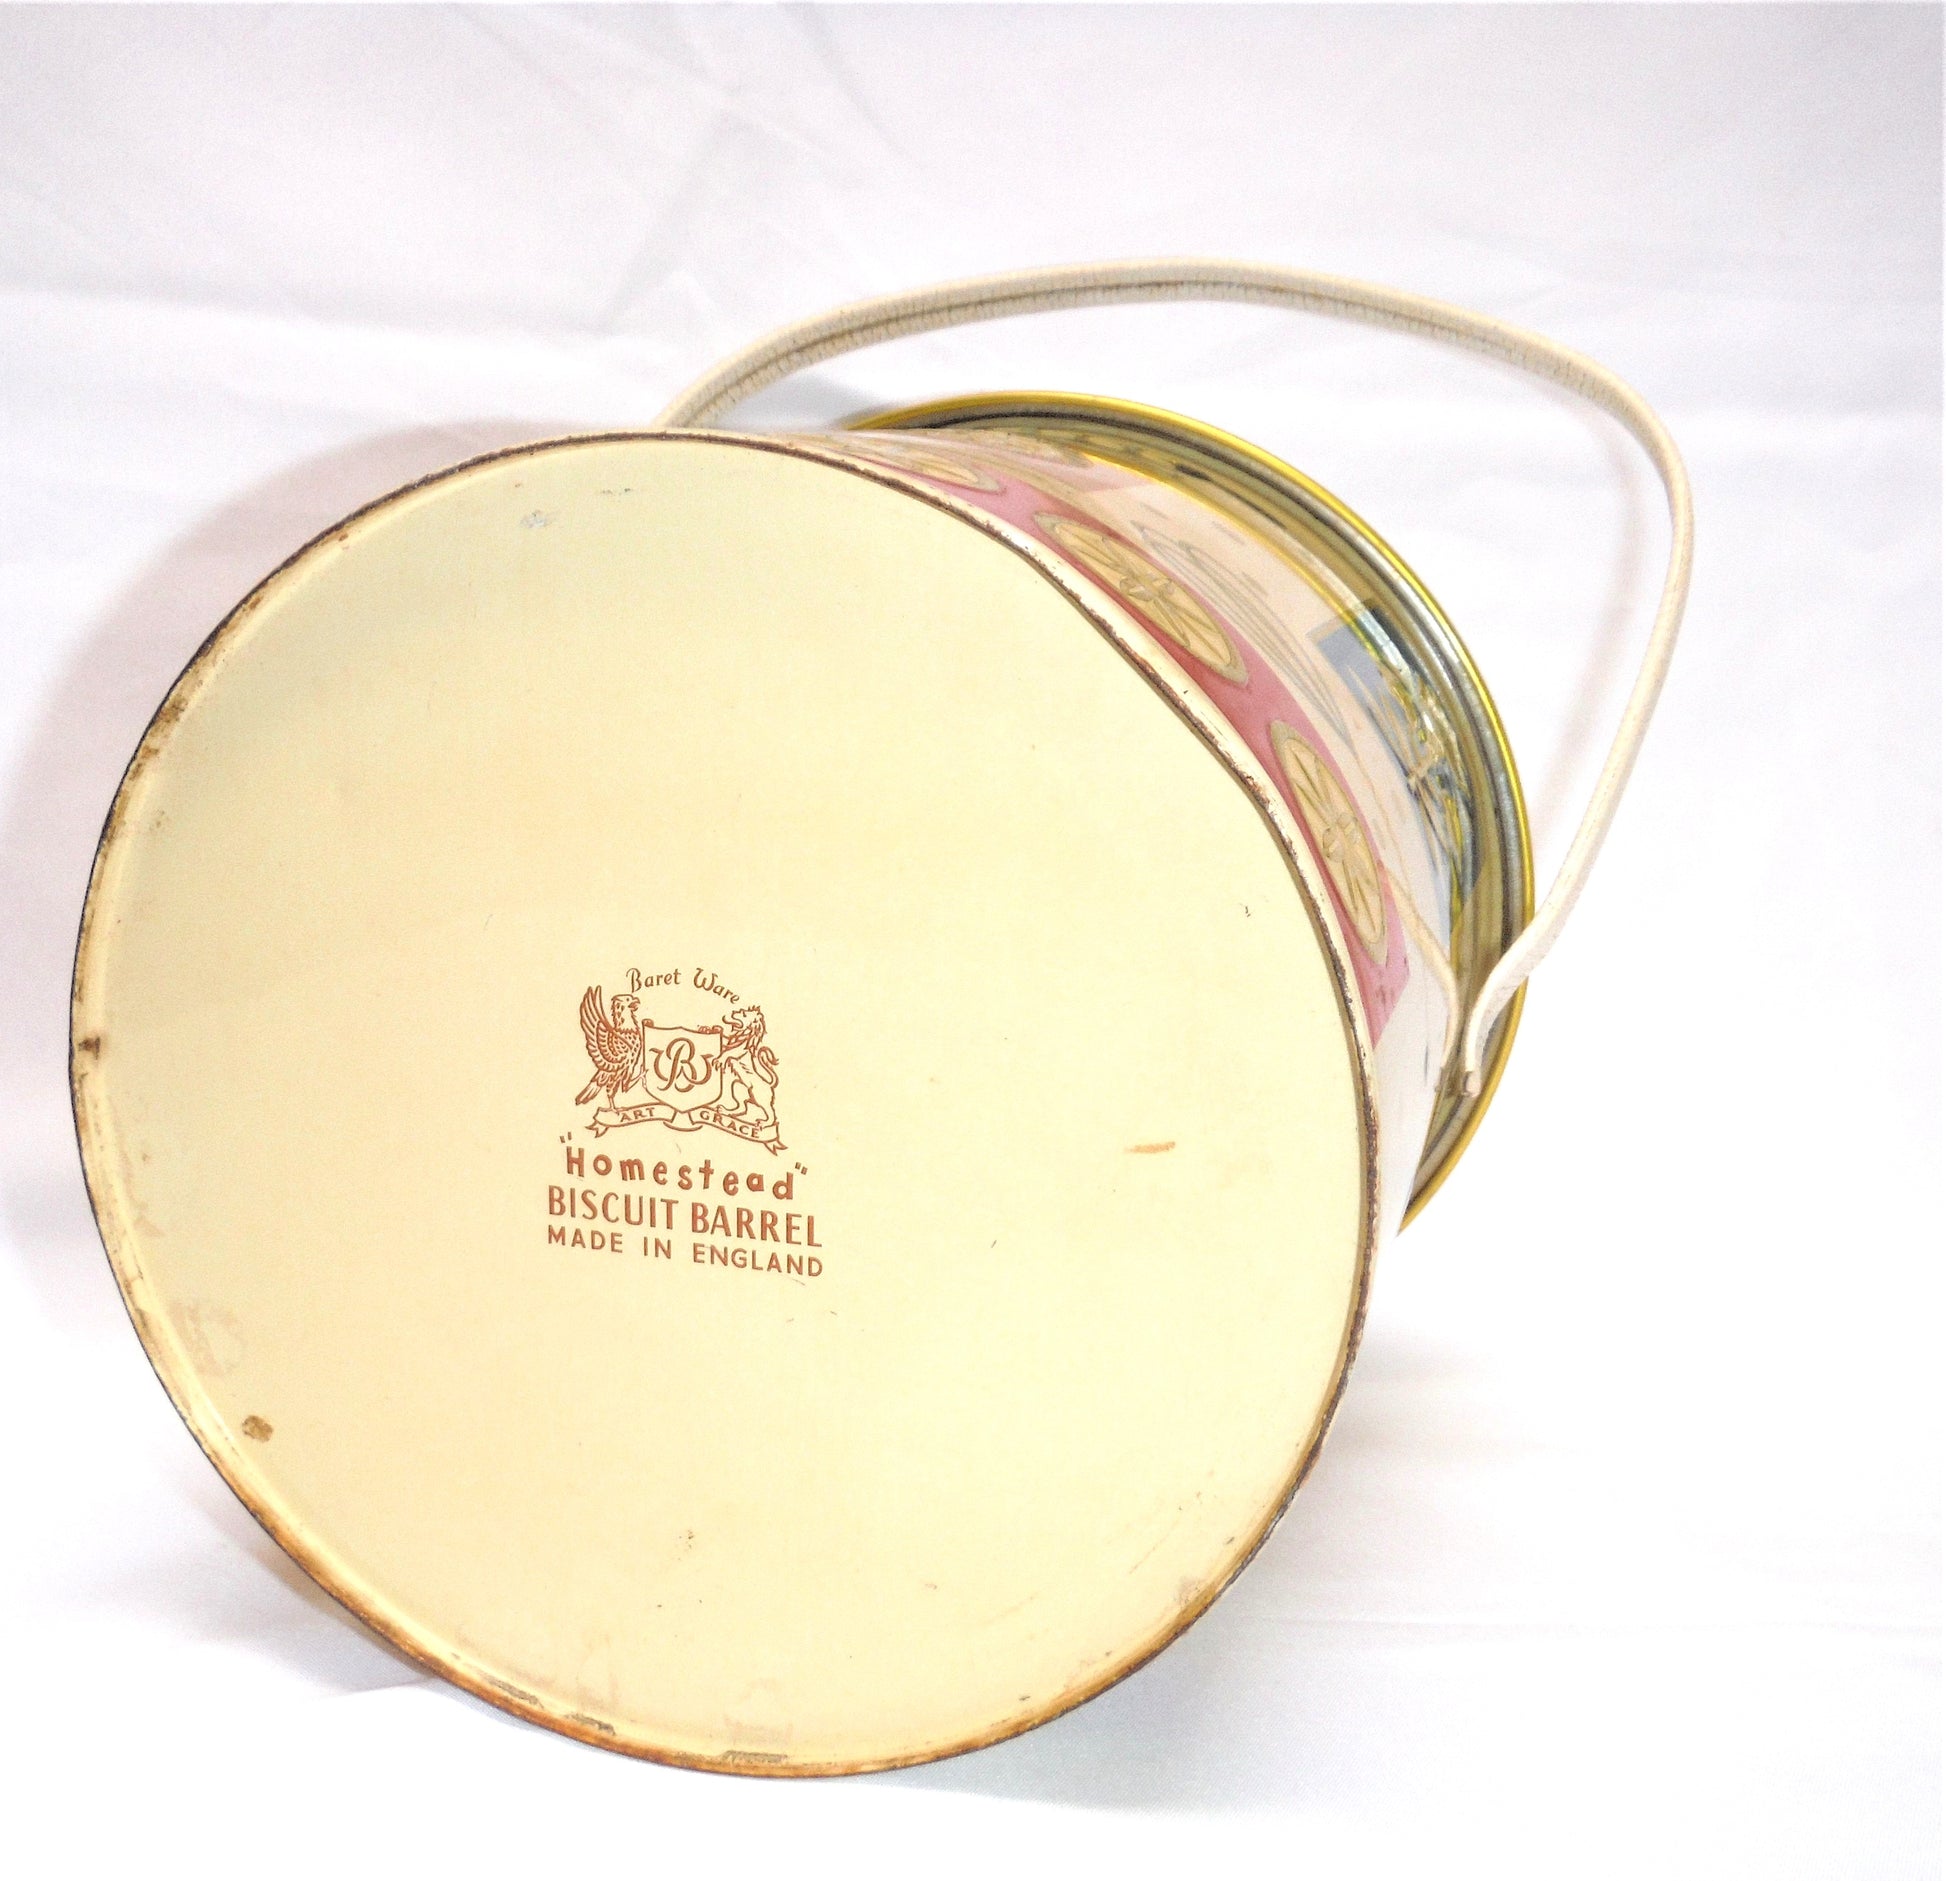 Vintage Tin Pail Biscuit Barrel with Original Handle by BARET WARE